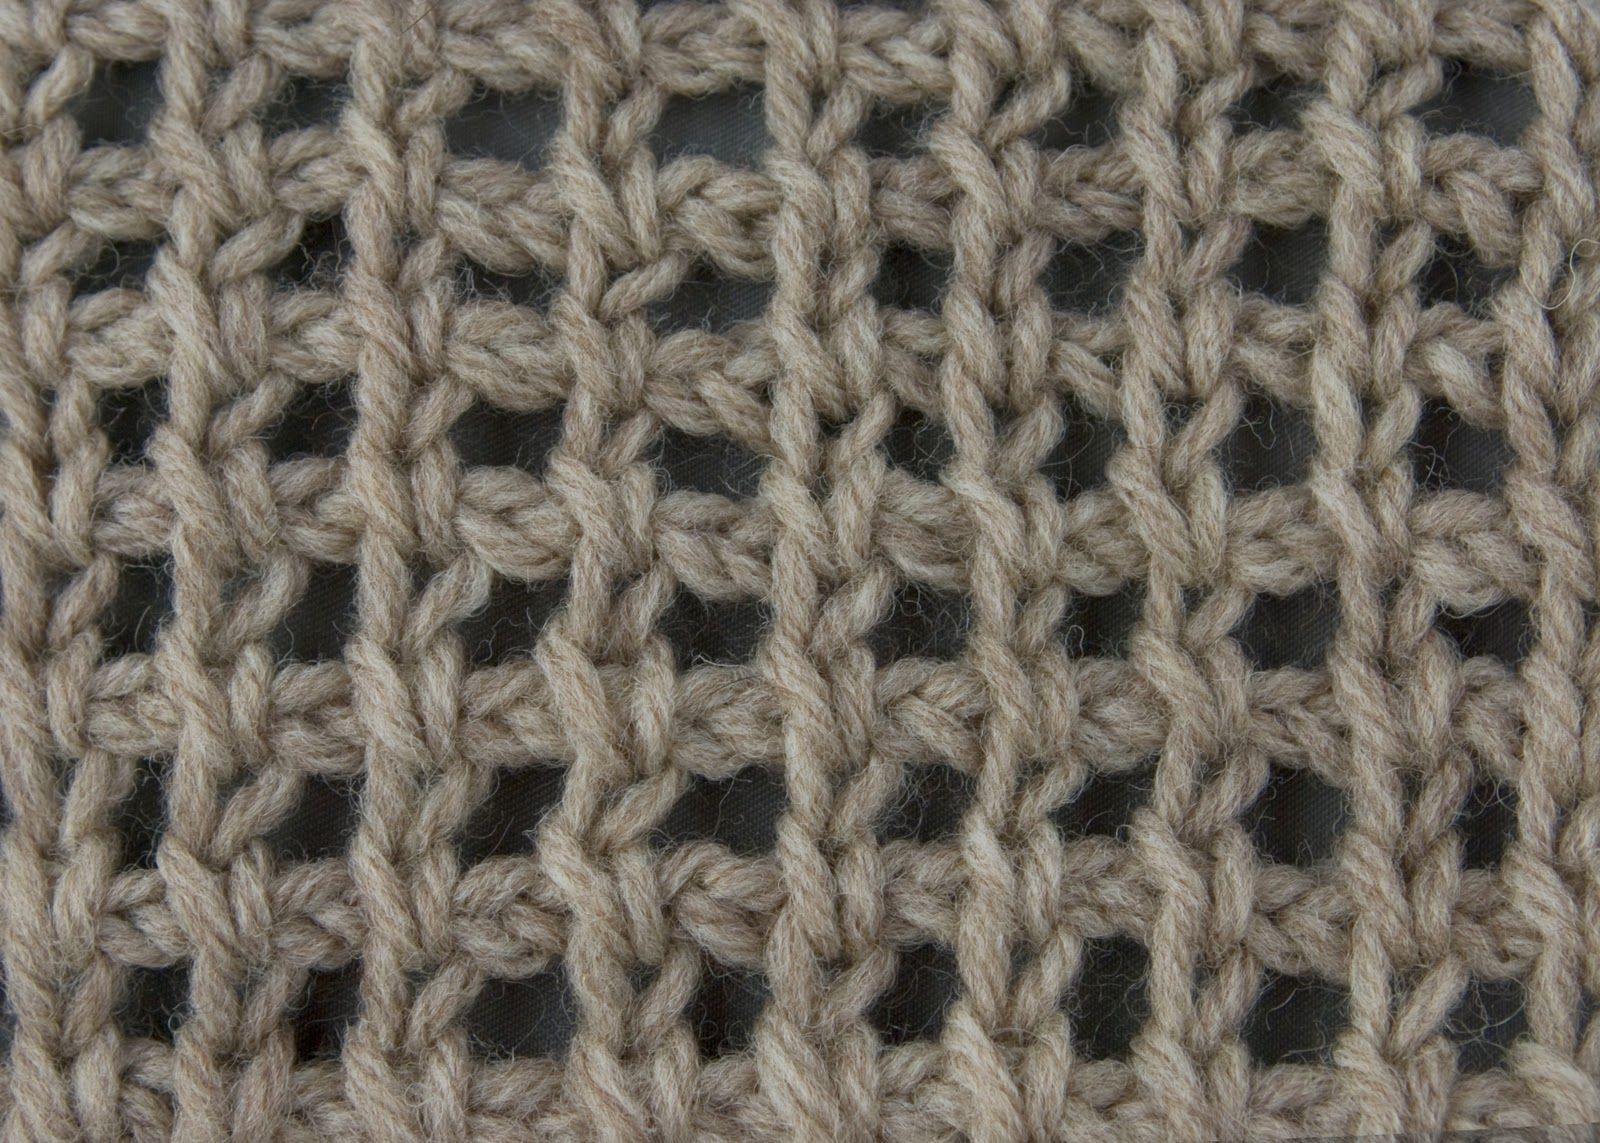 seed stitch knitting instructions